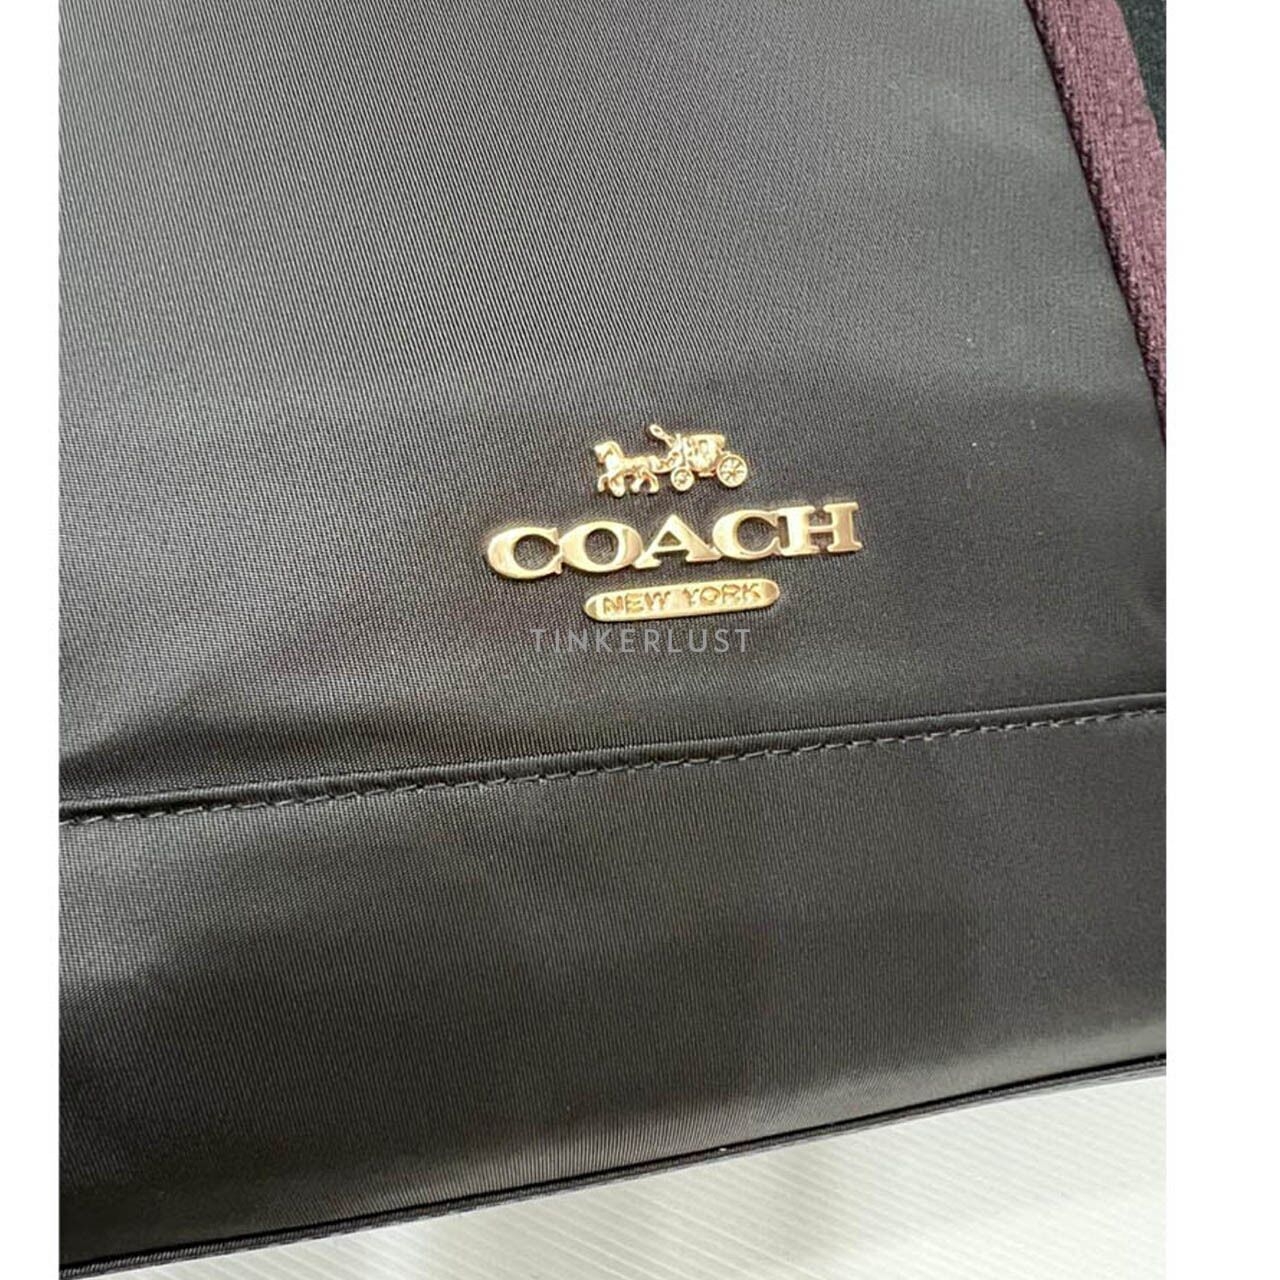 Coach Travel Bag Black Nylon Satchel